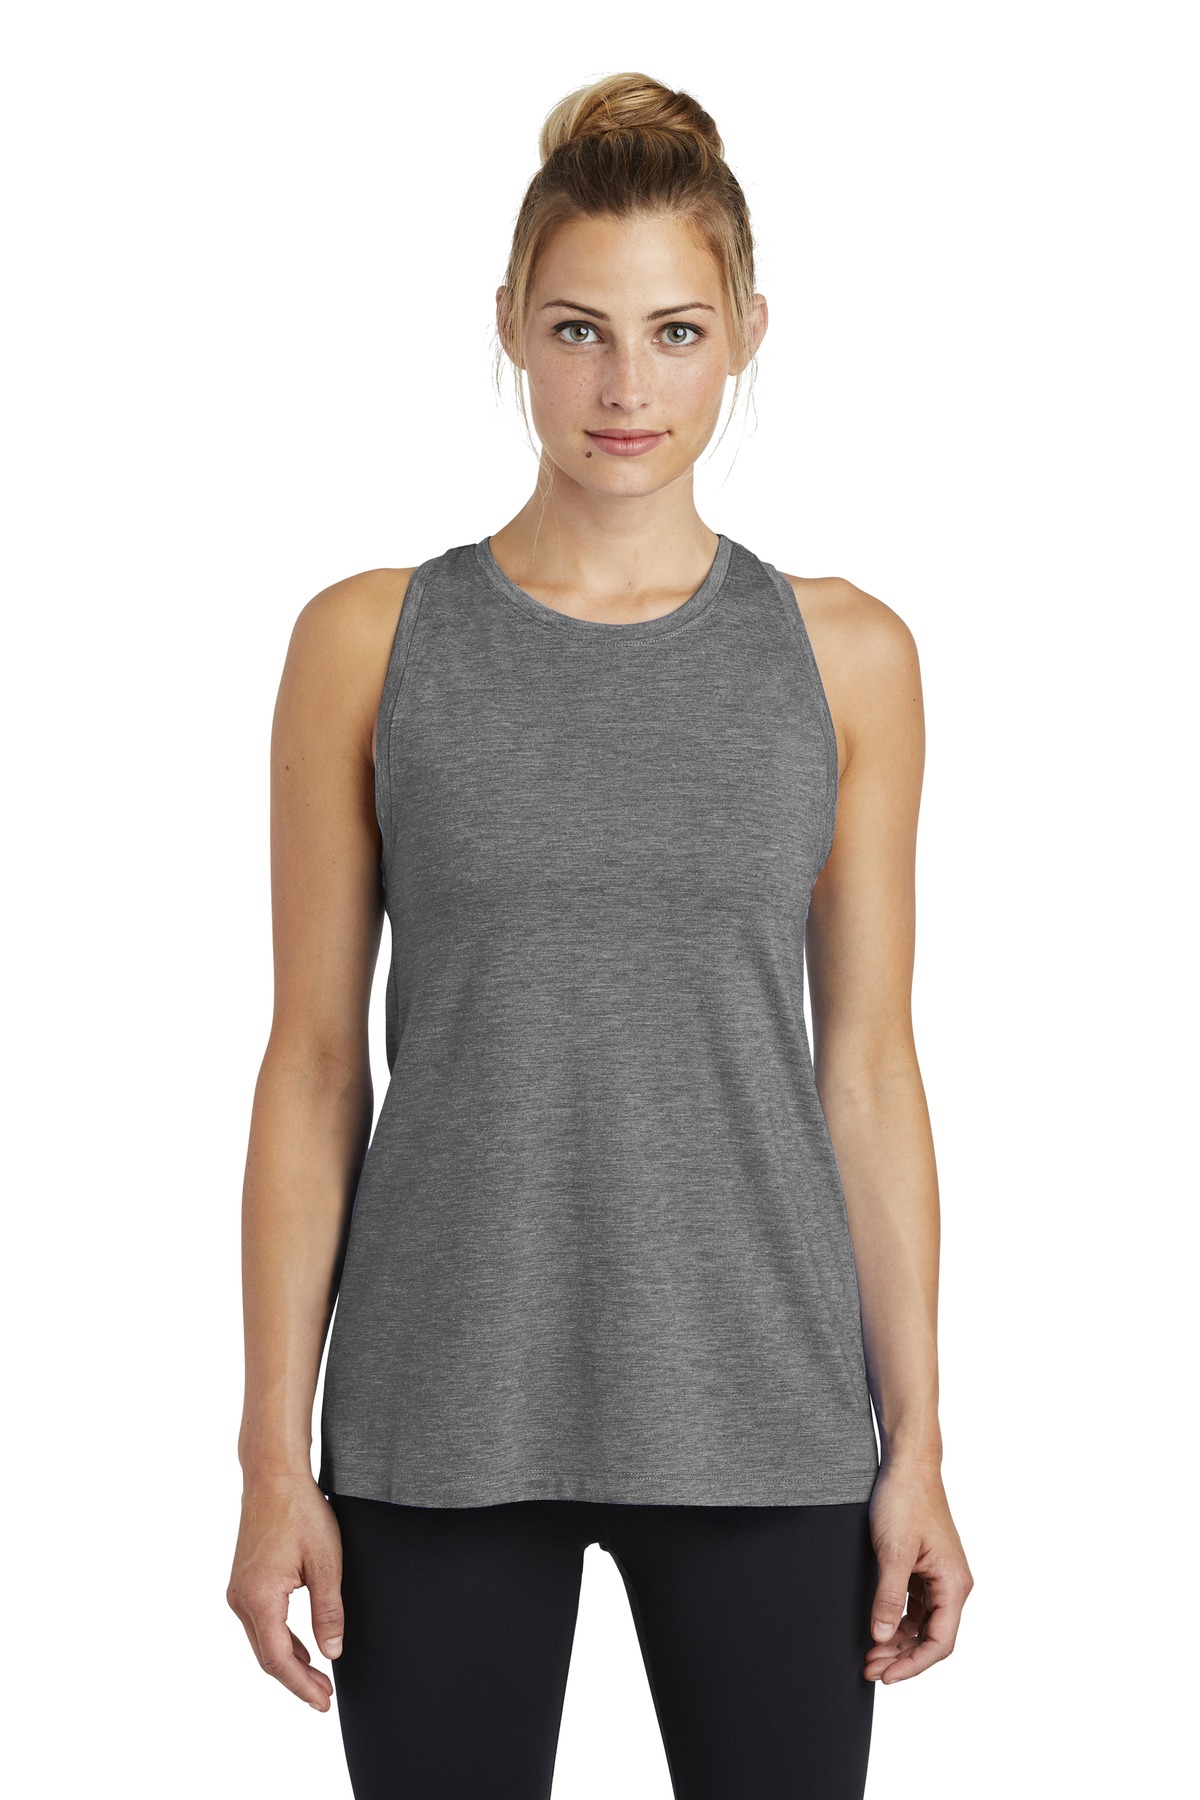 Sport-Tek Hospitality T-Shirts ® Ladies PosiCharge ® Tri-Blend Wicking Tank.-Sport-Tek